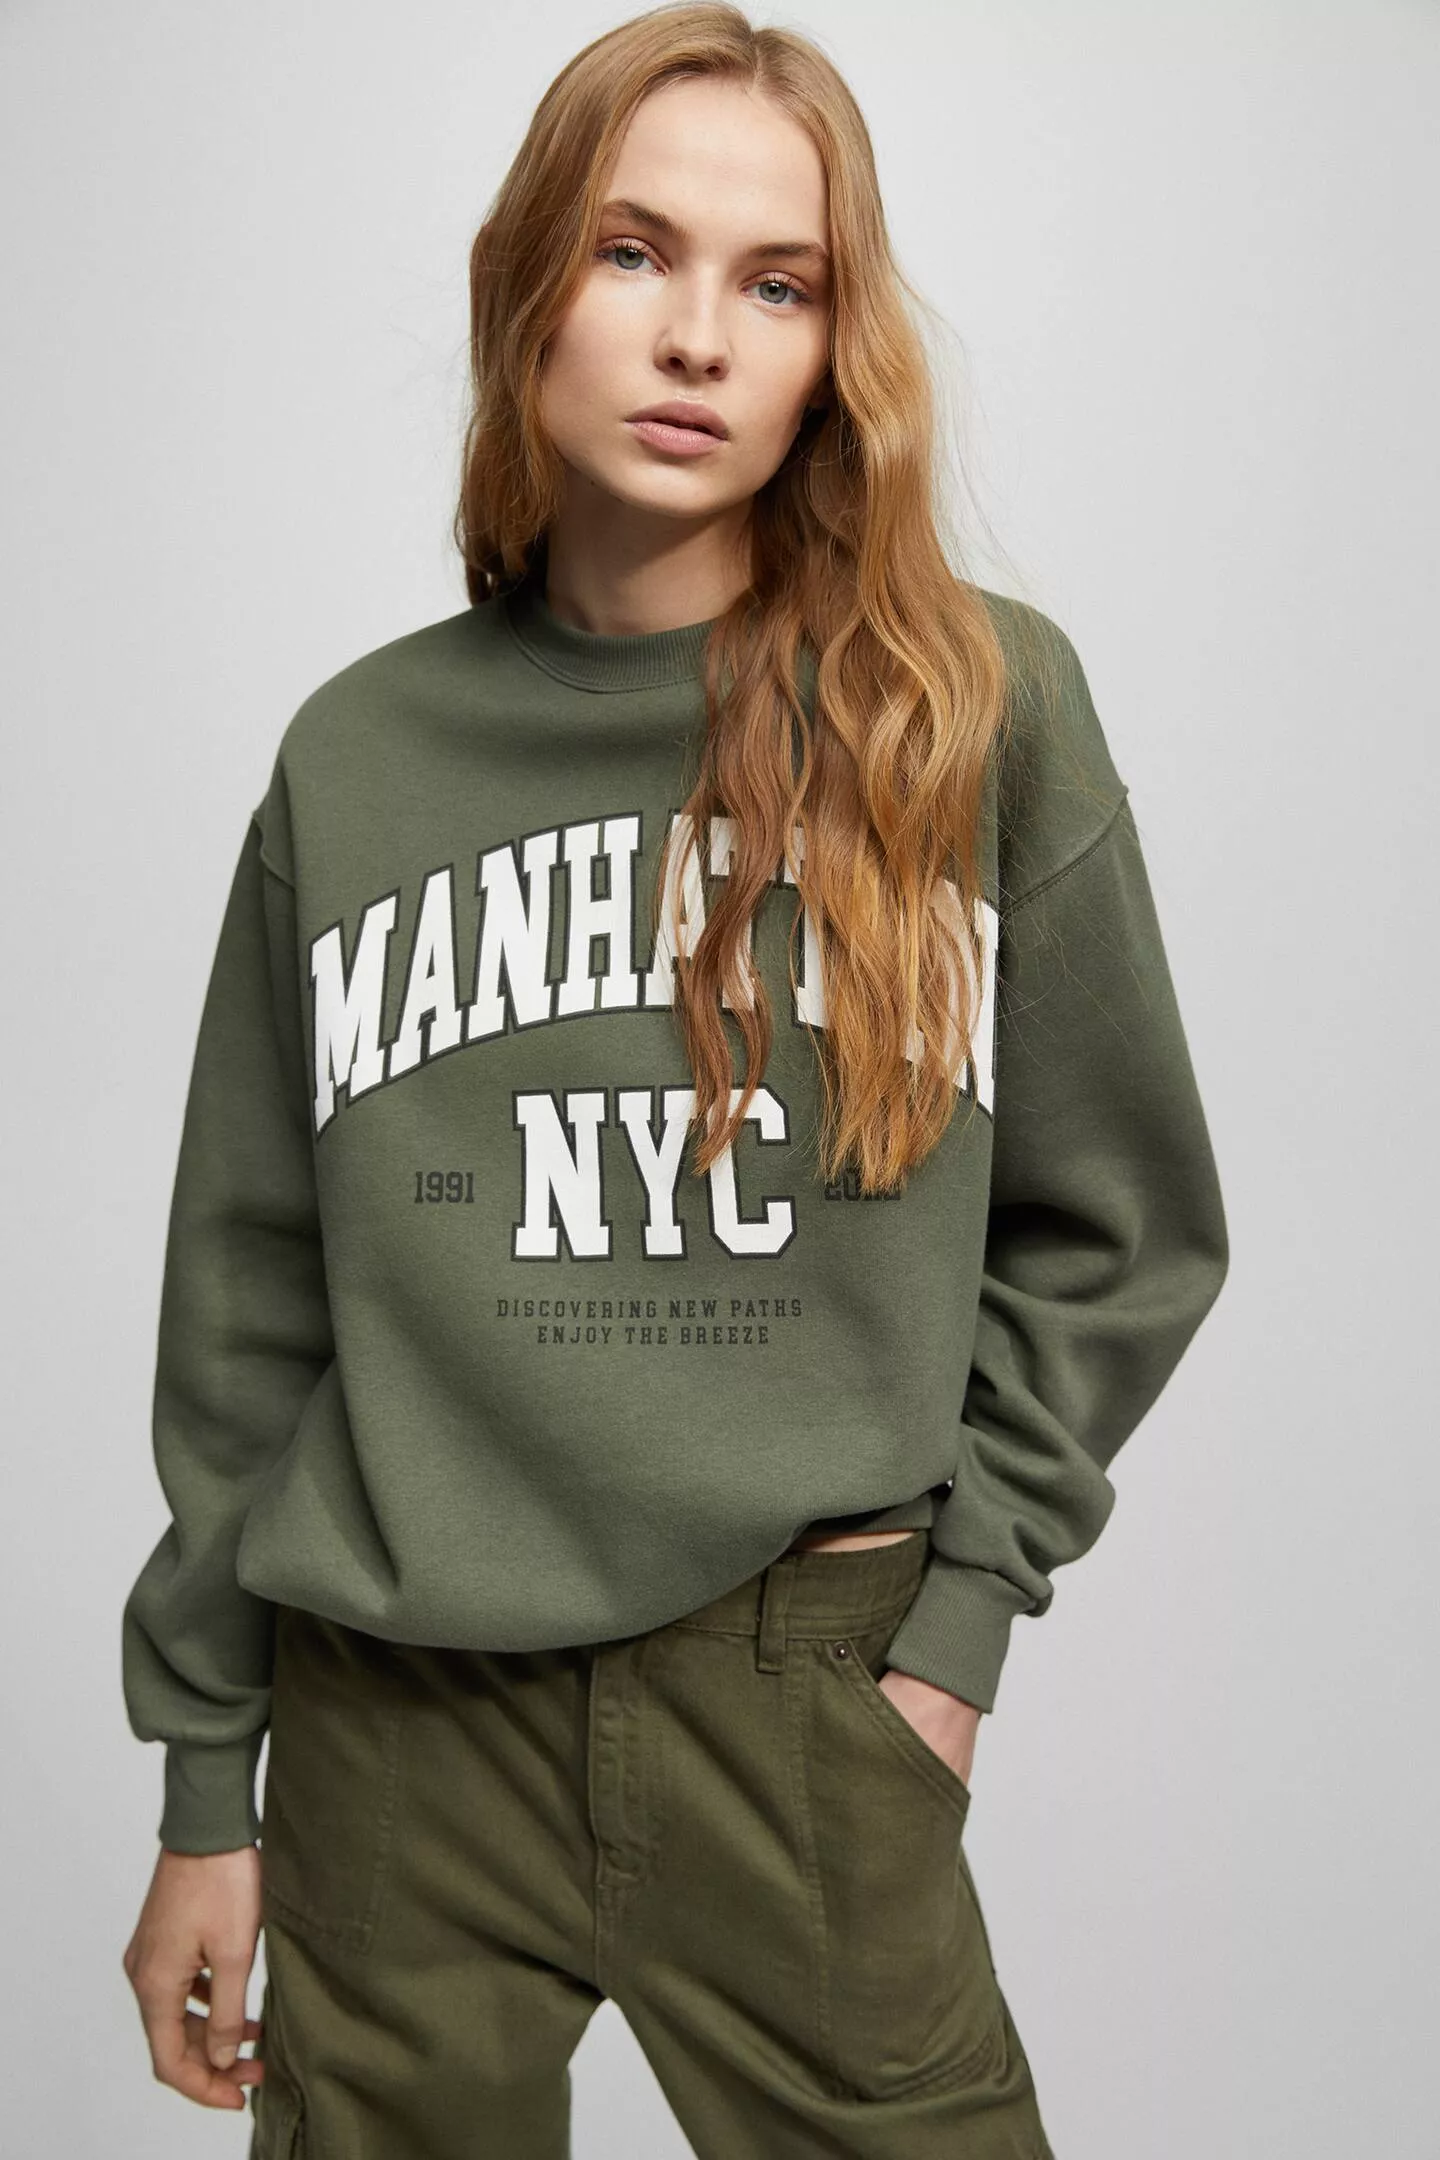 Pull&Bear 'NYC' varsity oversized sweatshirt in black